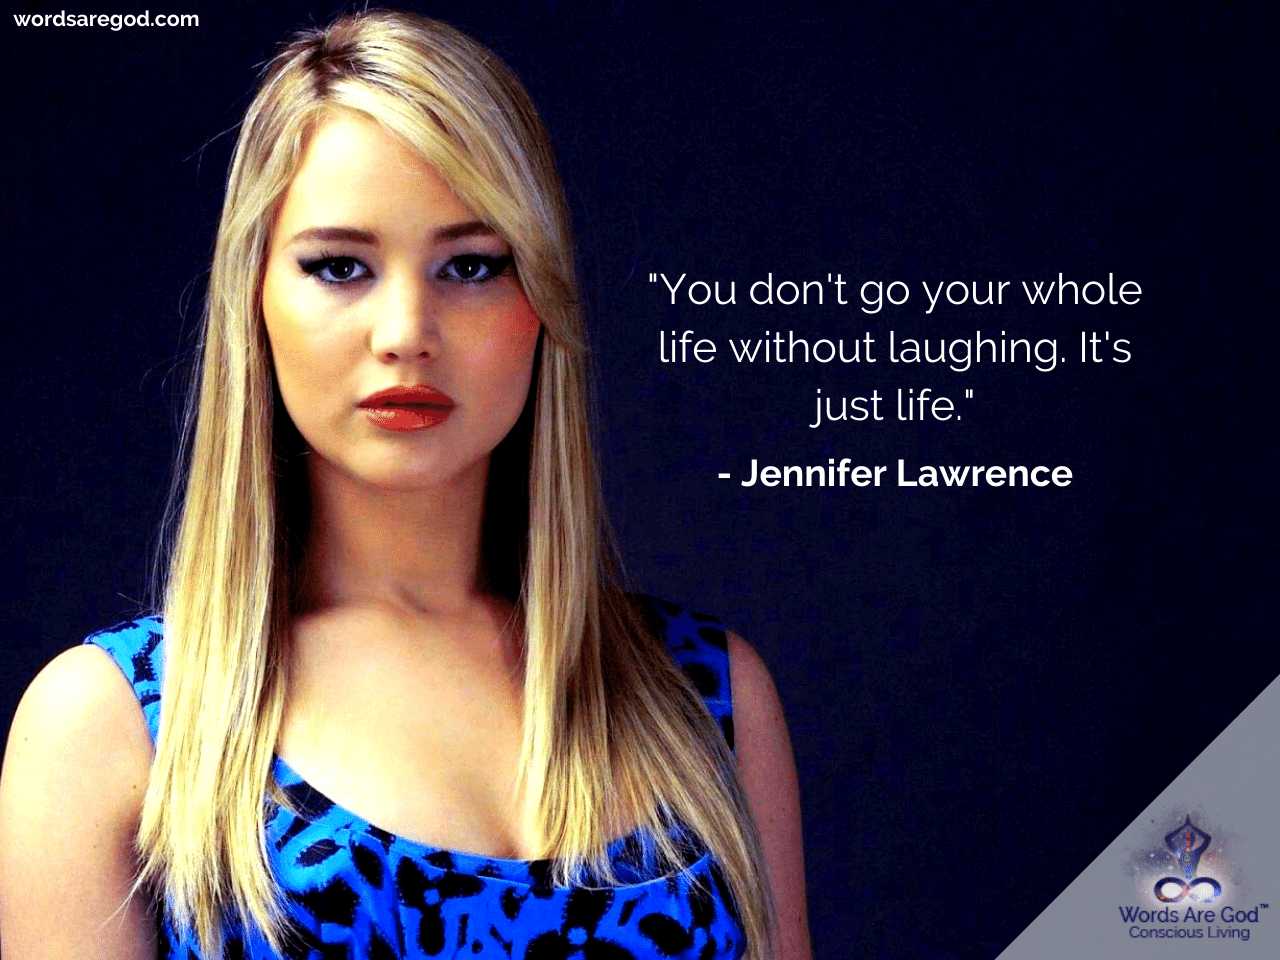 Jennifer Lawrence Motivational Quotes